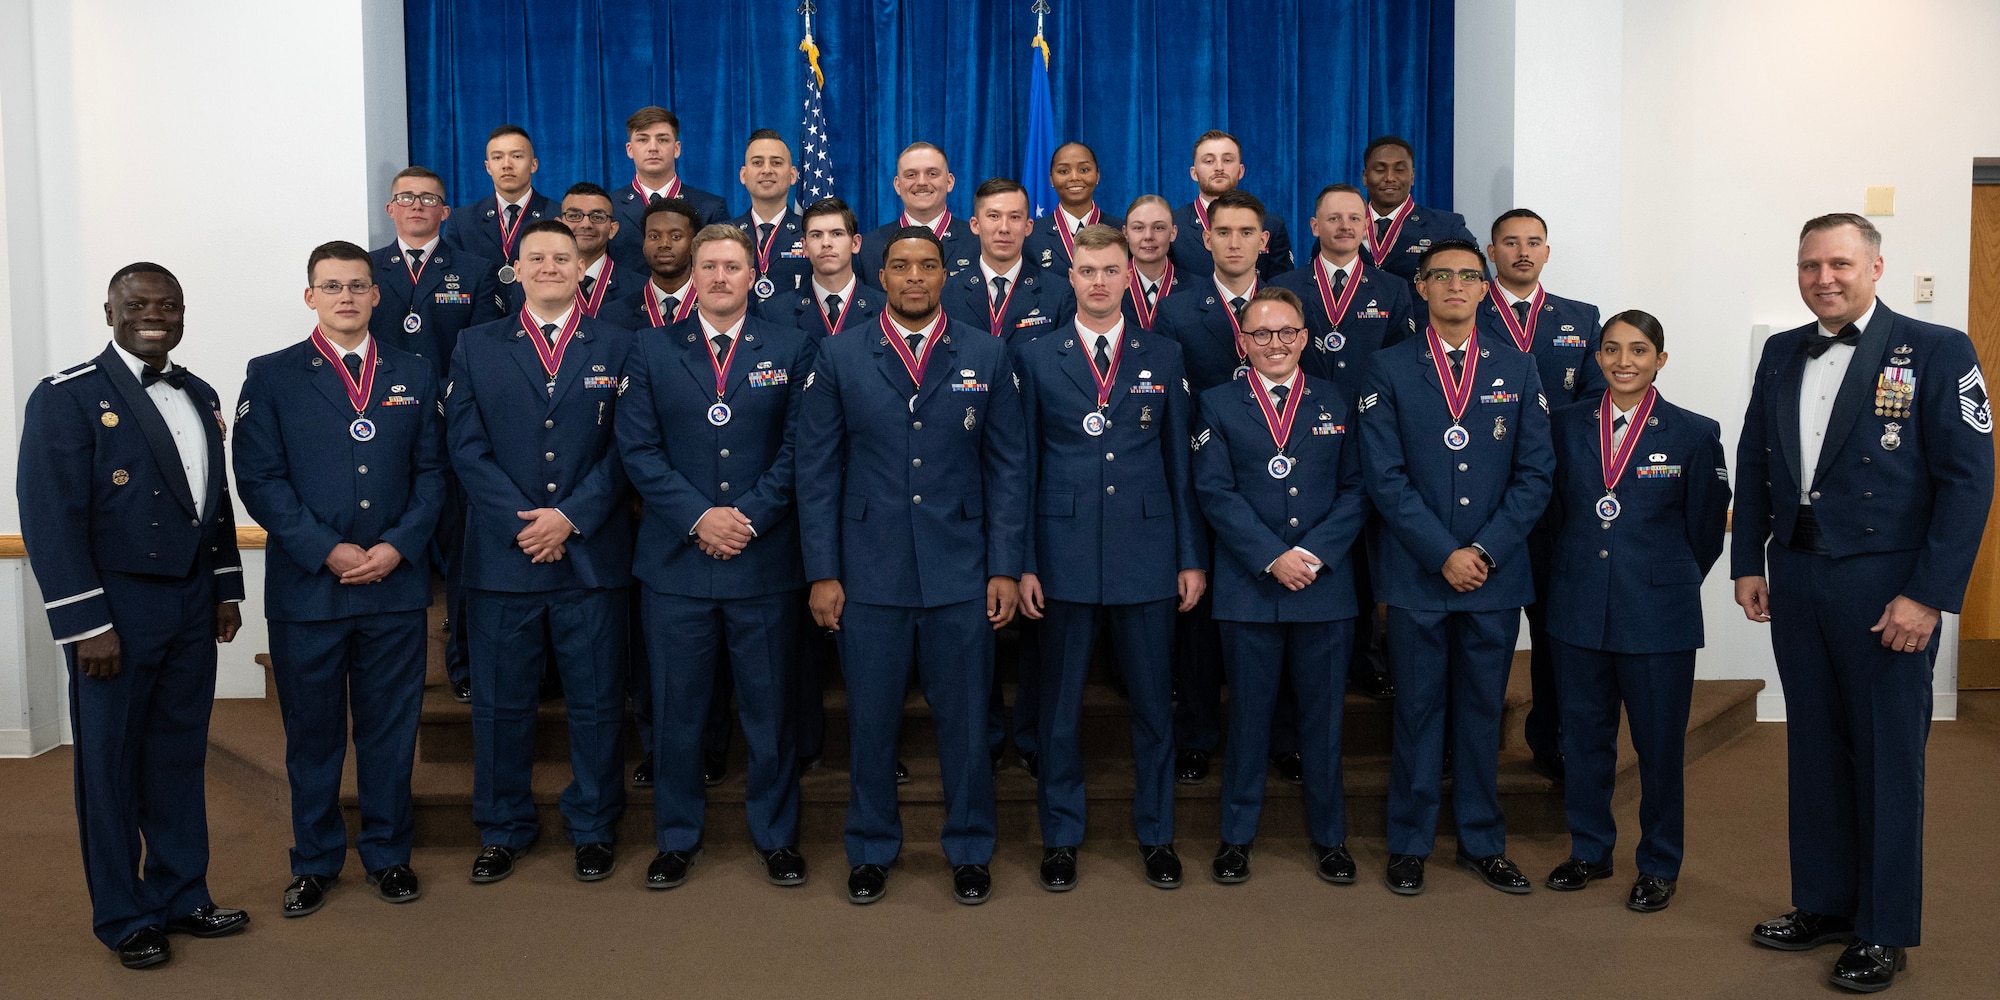 group photo of Airman Leadership School graduates with leadership